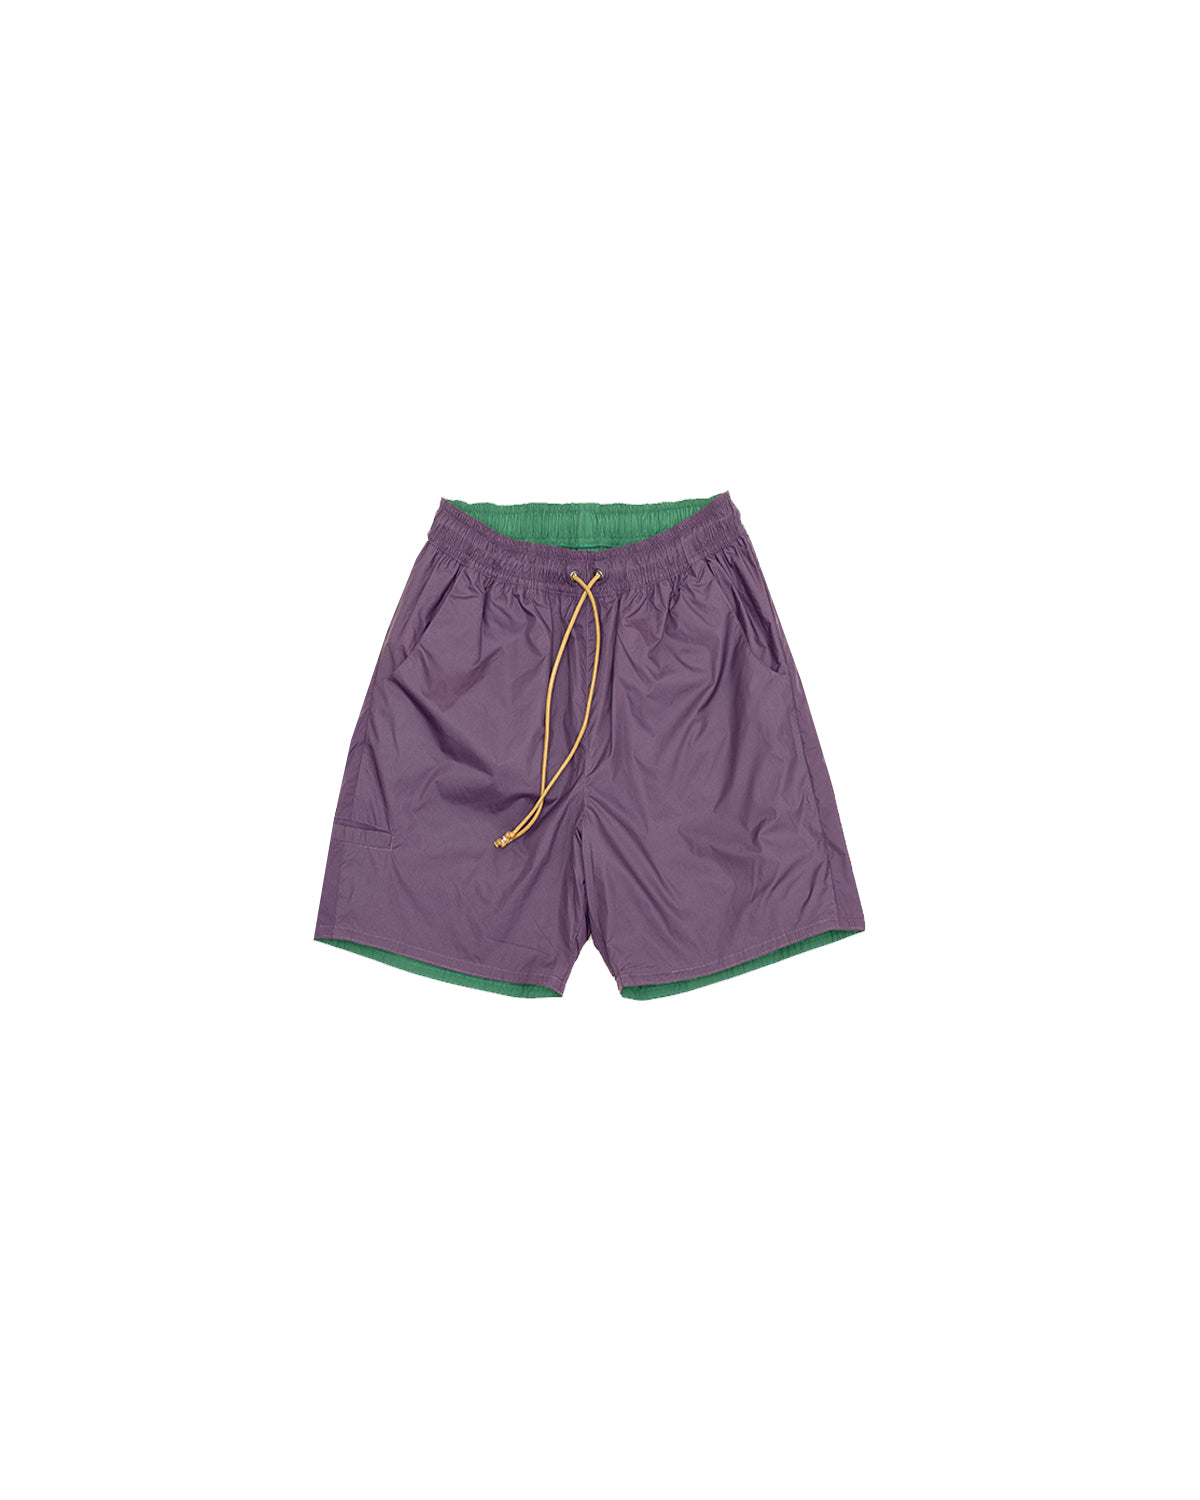 Reversible Pareja Shorts - Clover Green/Grape